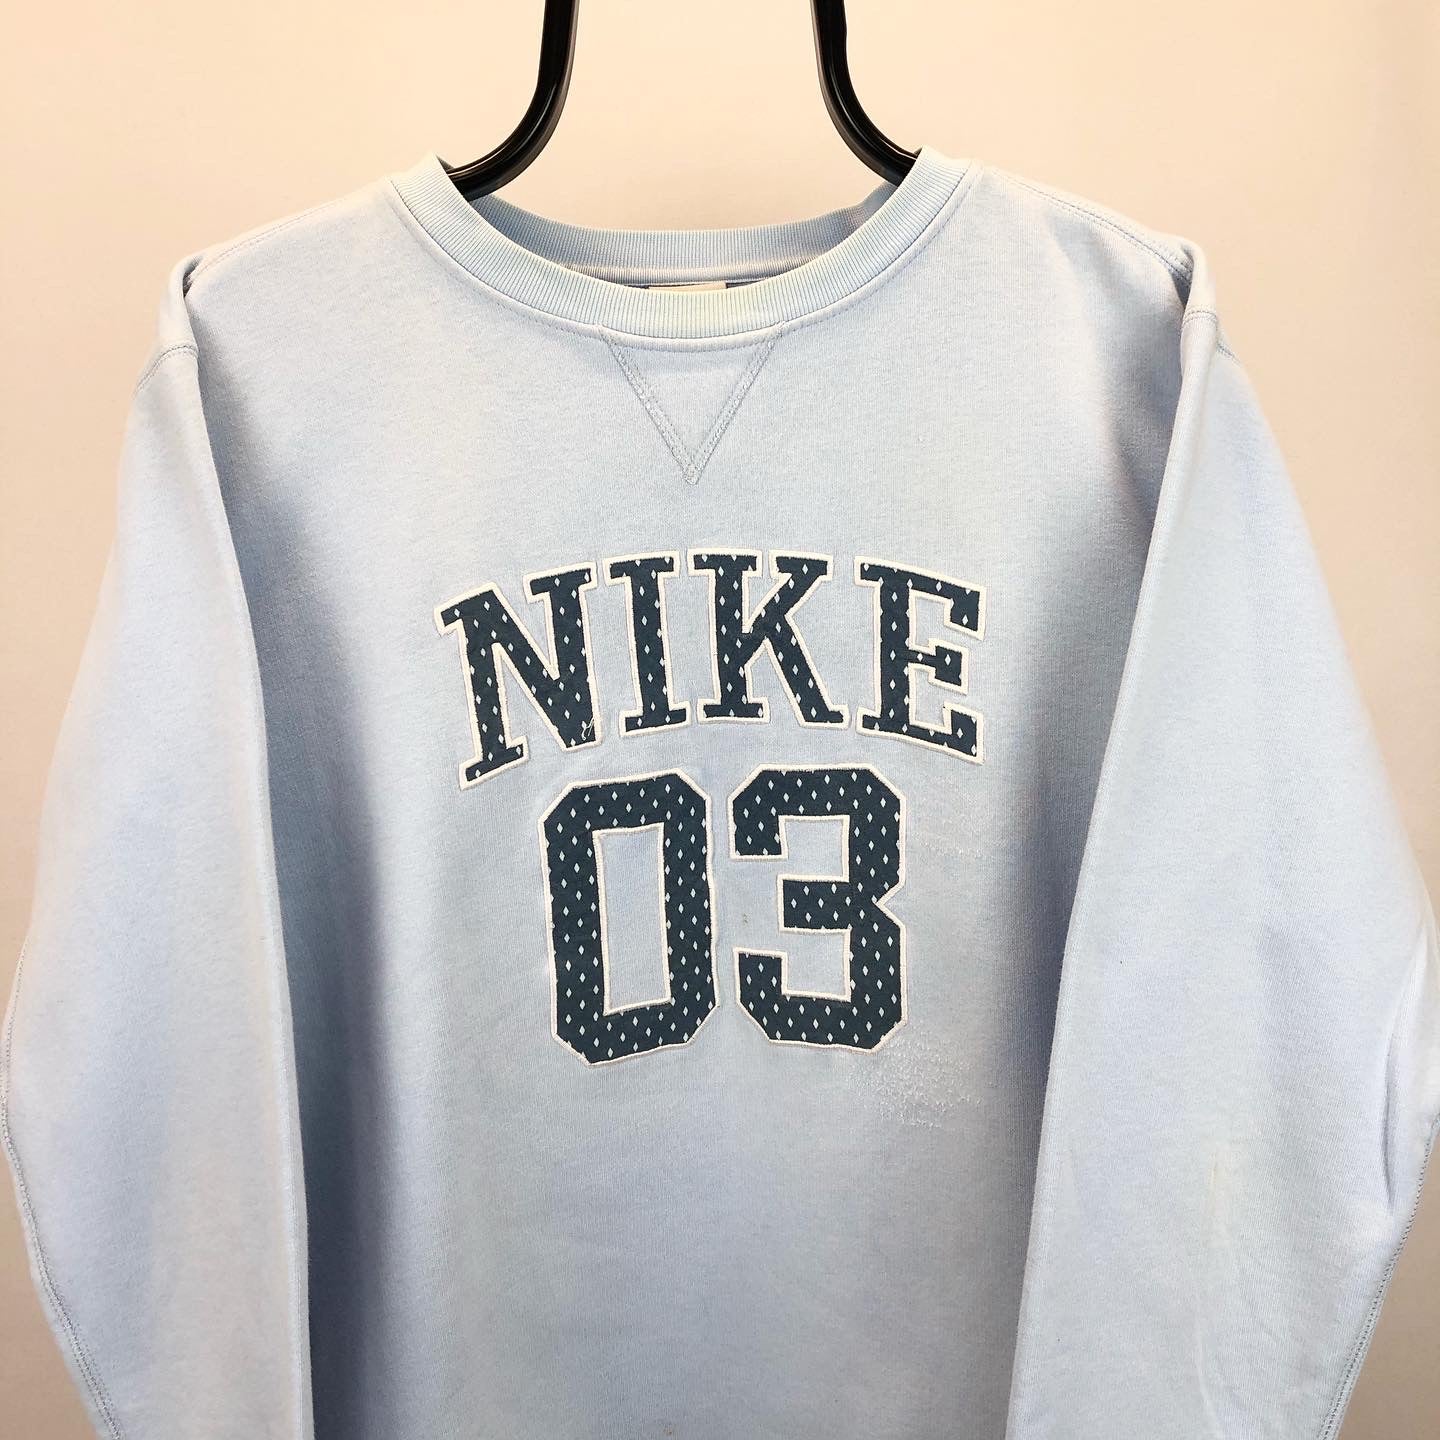 Vintage Nike Spellout Sweatshirt in Baby Blue - Men's Medium/Women's Large